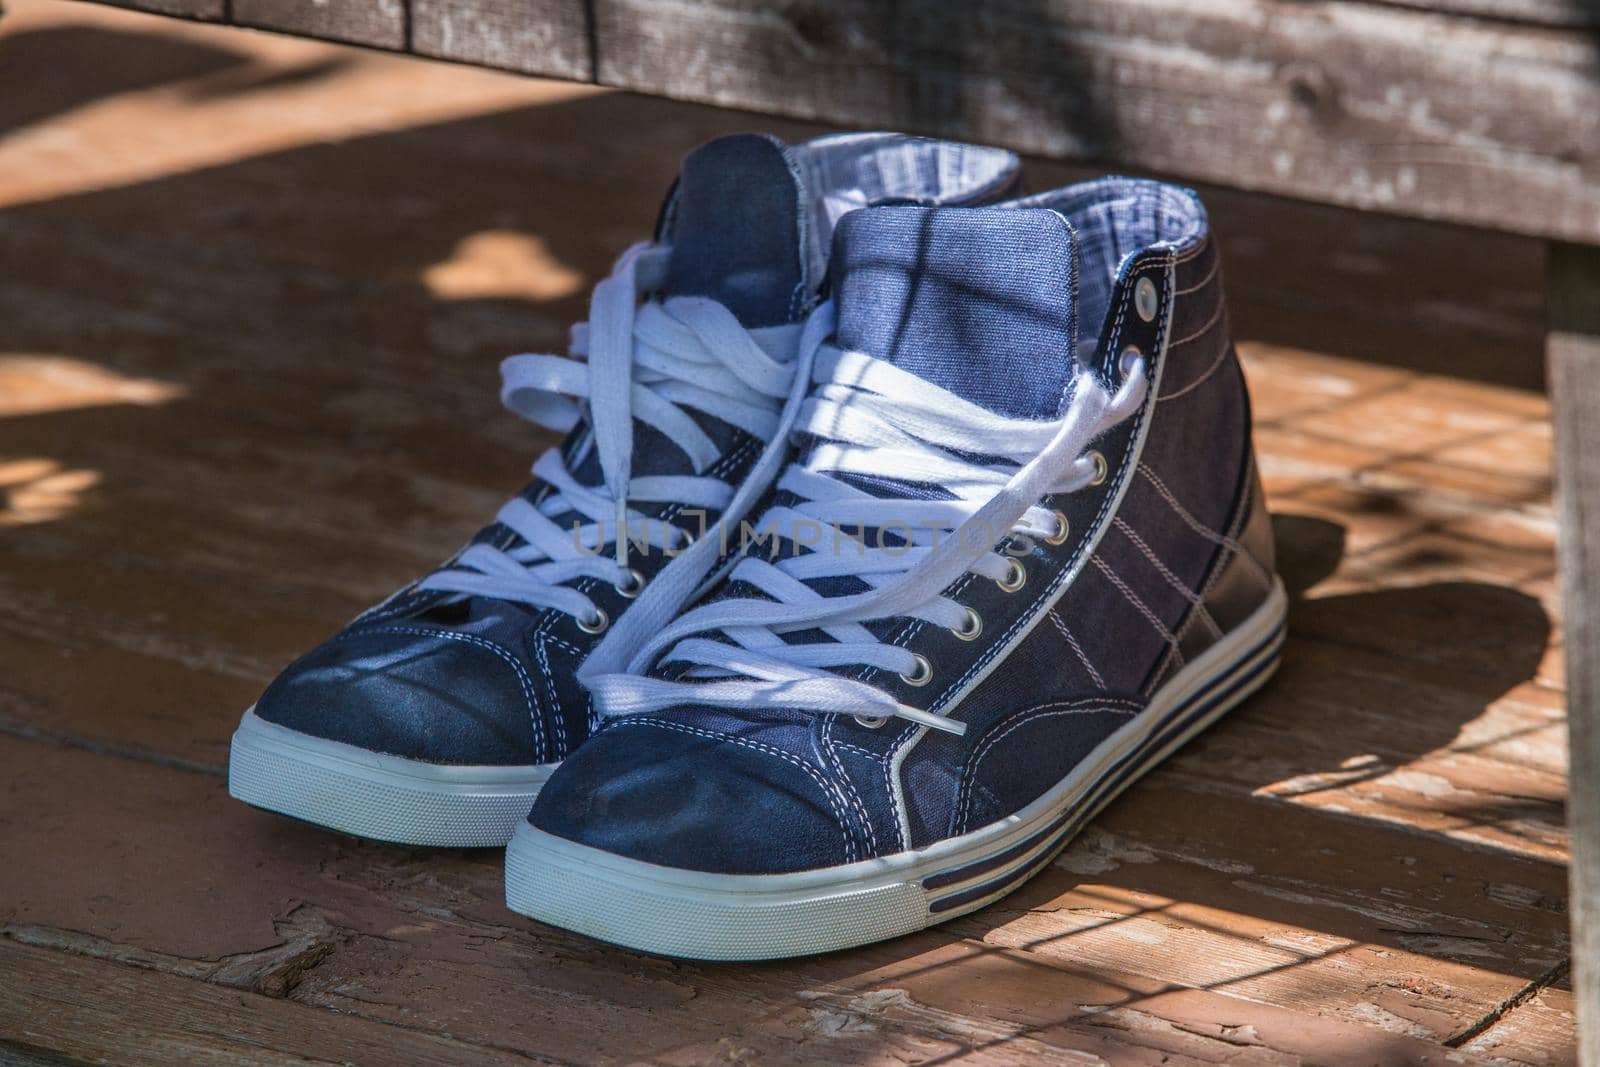 Men's blue denim sneakers on an old floor lit by the sun